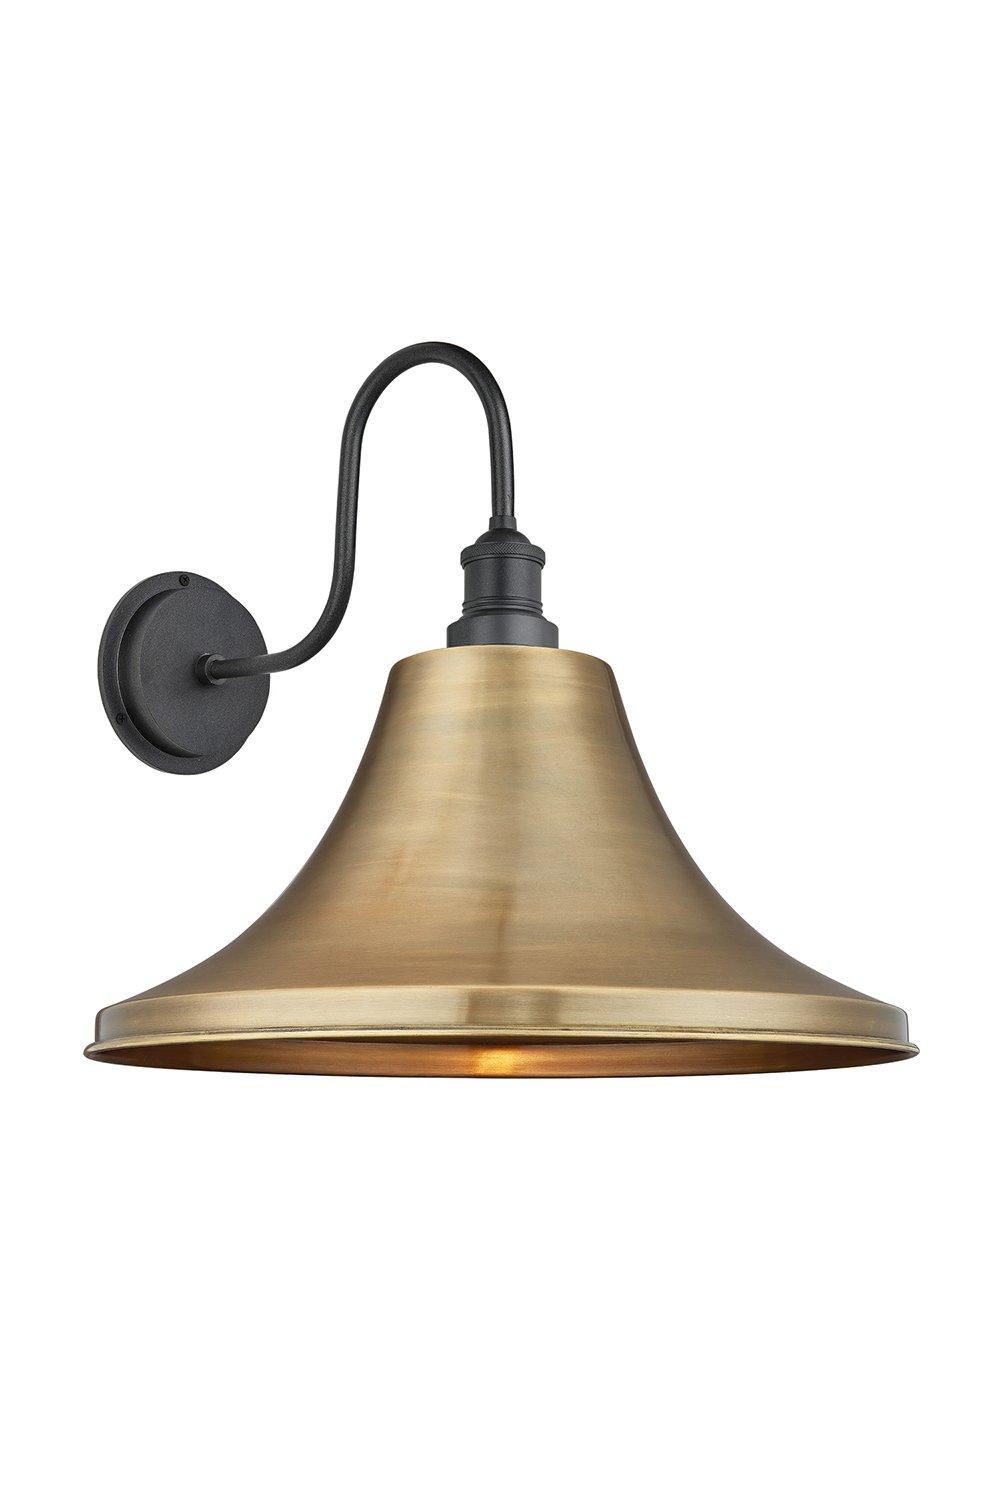 Swan Neck Outdoor & Bathroom Giant Bell Wall Light, 20 Inch, Brass, Pewter Holder, Globe Glass